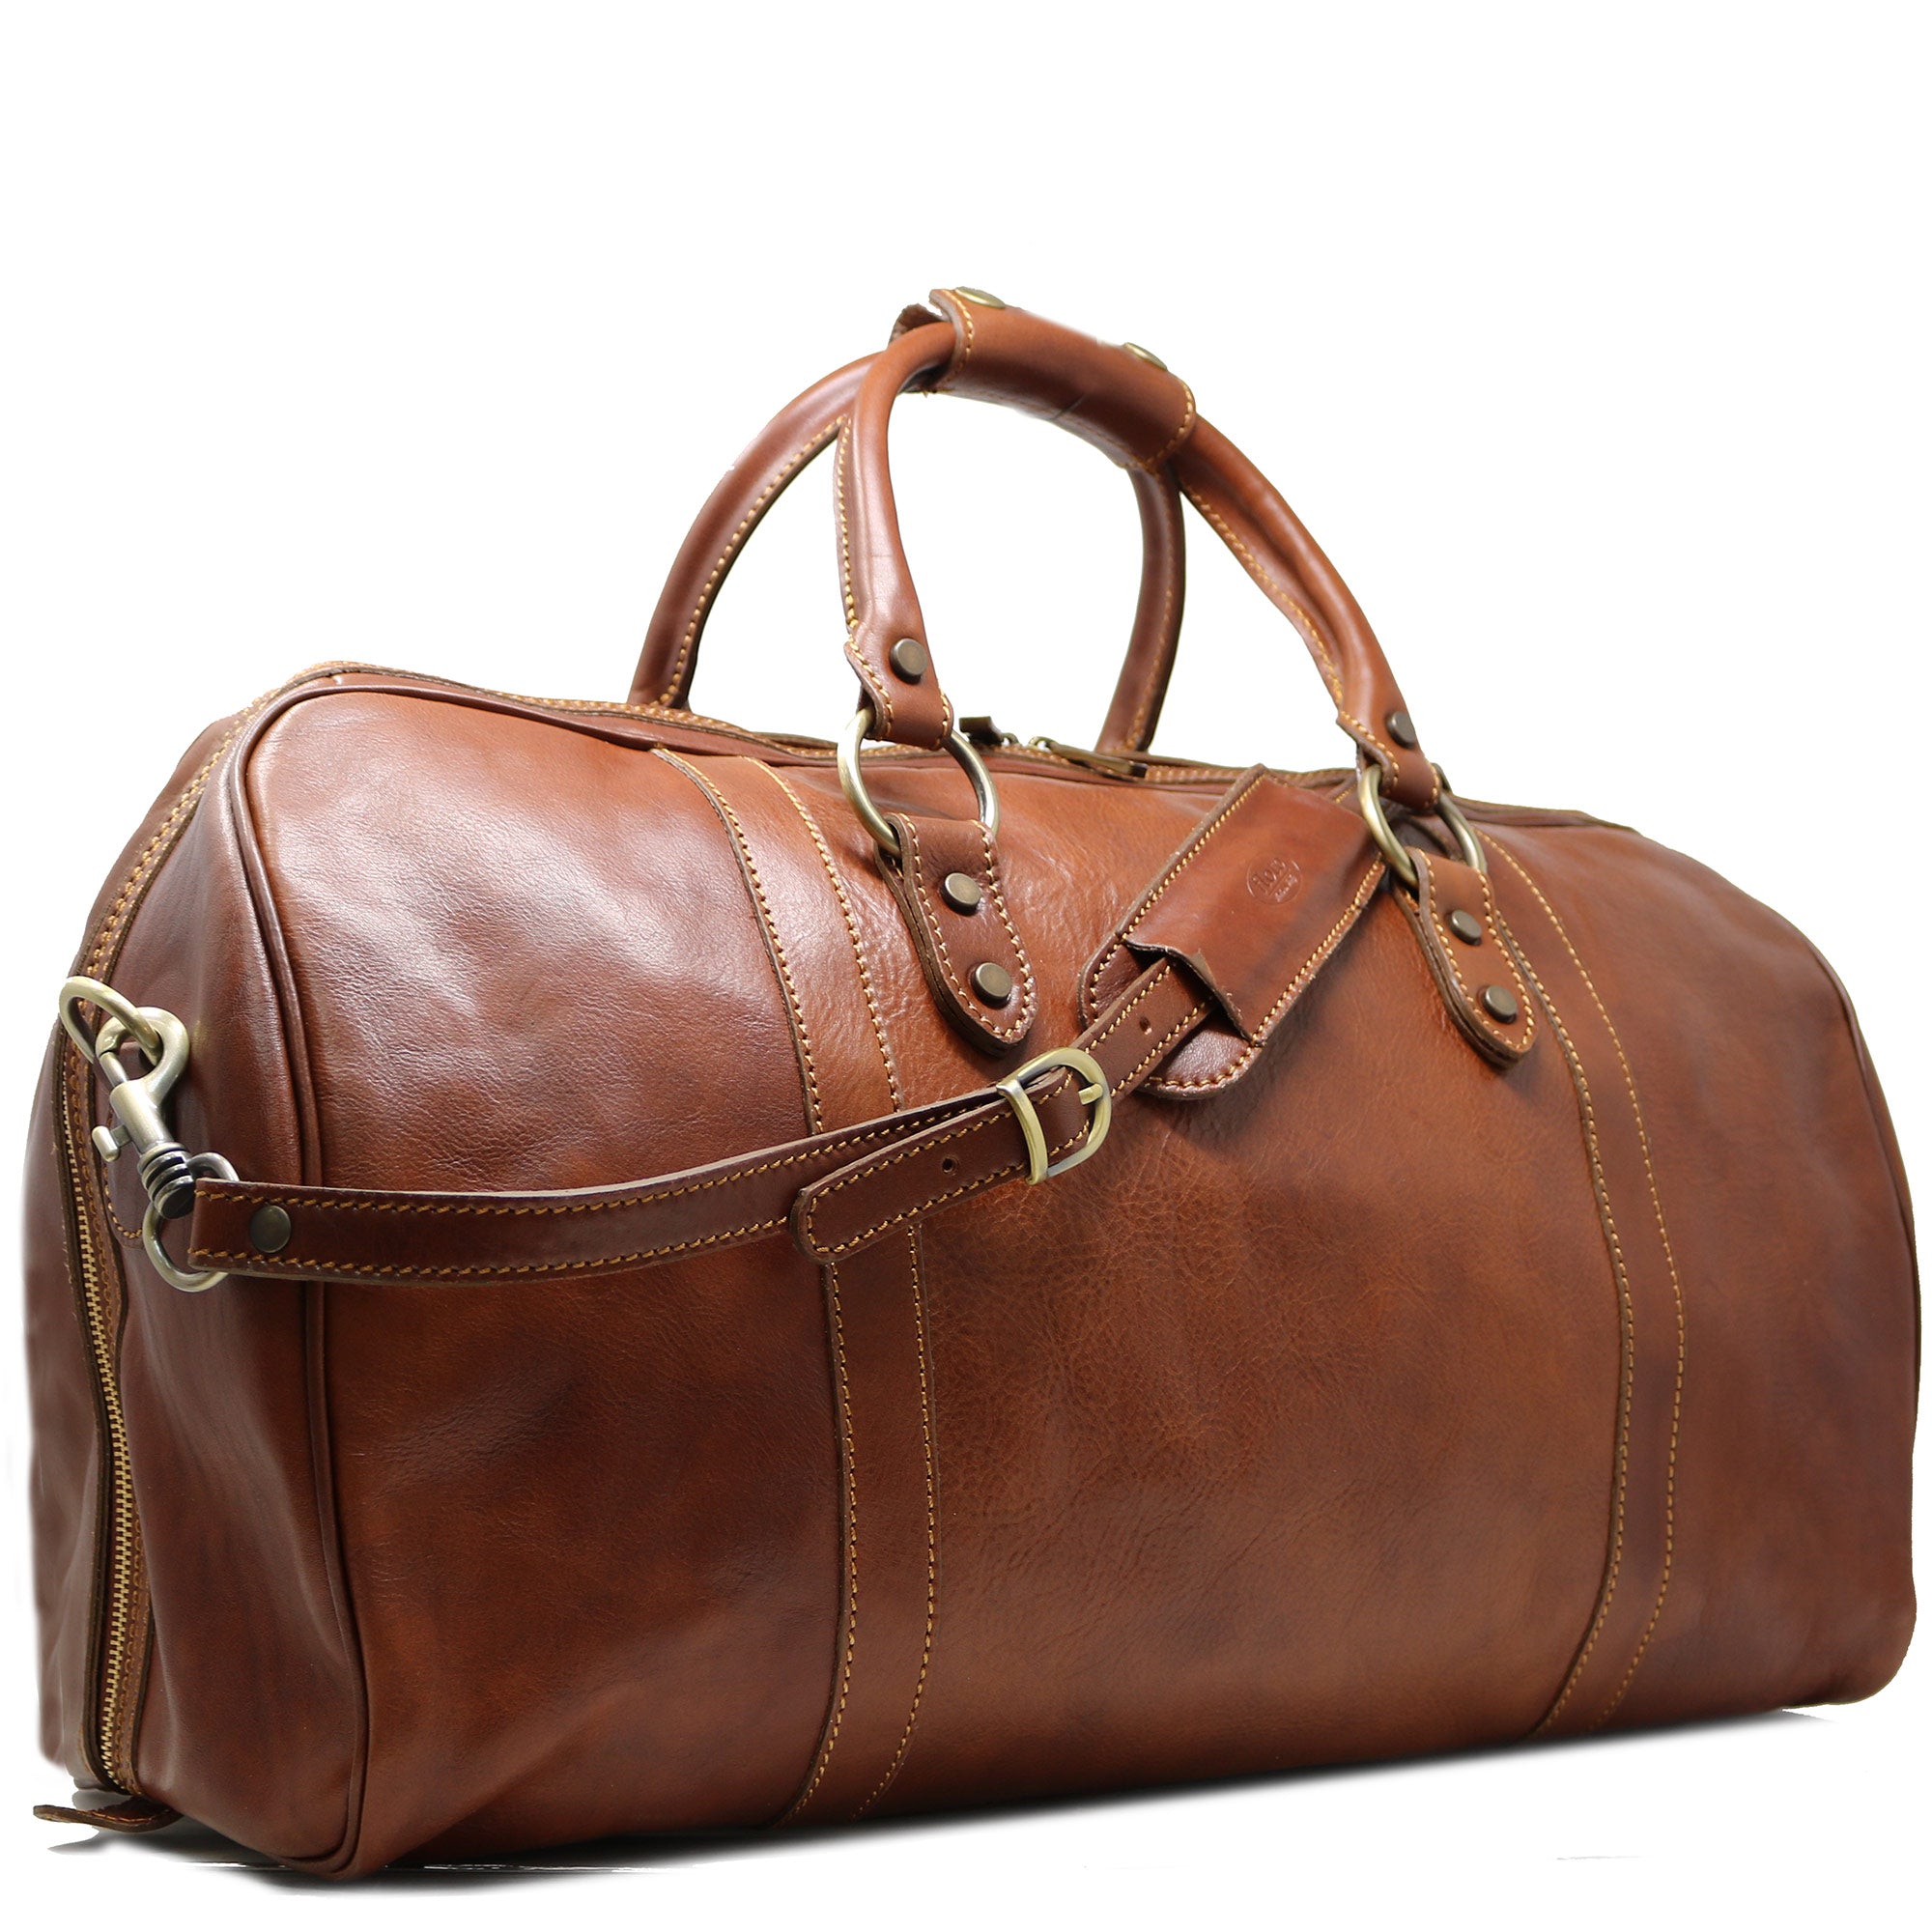  Leather travel bag duffle bag leather shoulder bag brown men  women travel bag gym bag luggage Italian flag weekender duffle bag :  Everything Else